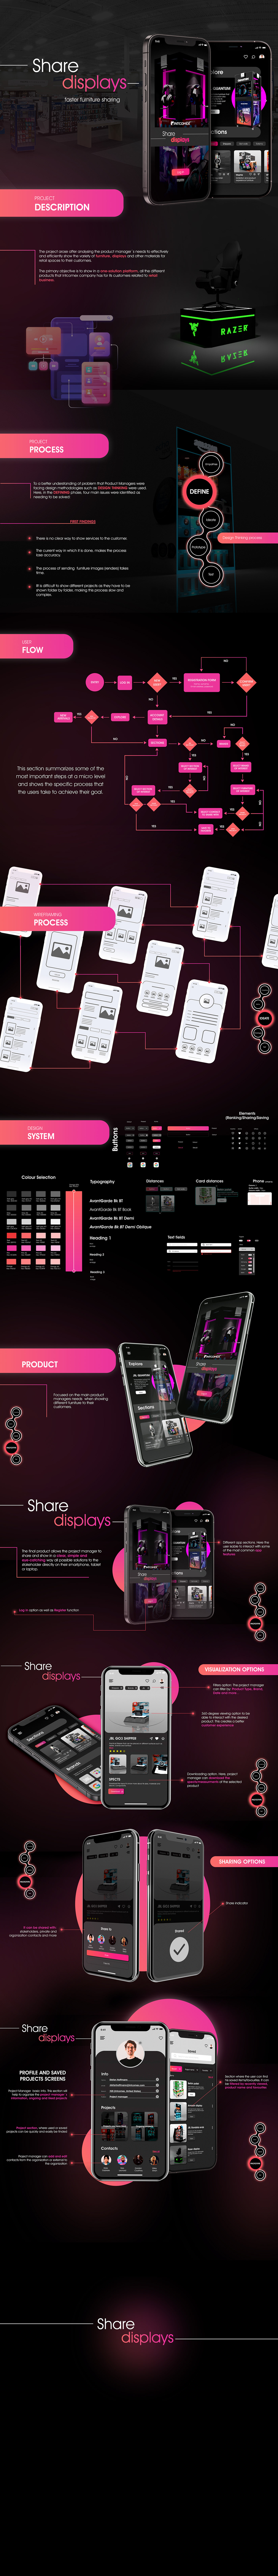 design design system Figma Interface Mobile app ui design UI/UX user experience user interface UX design